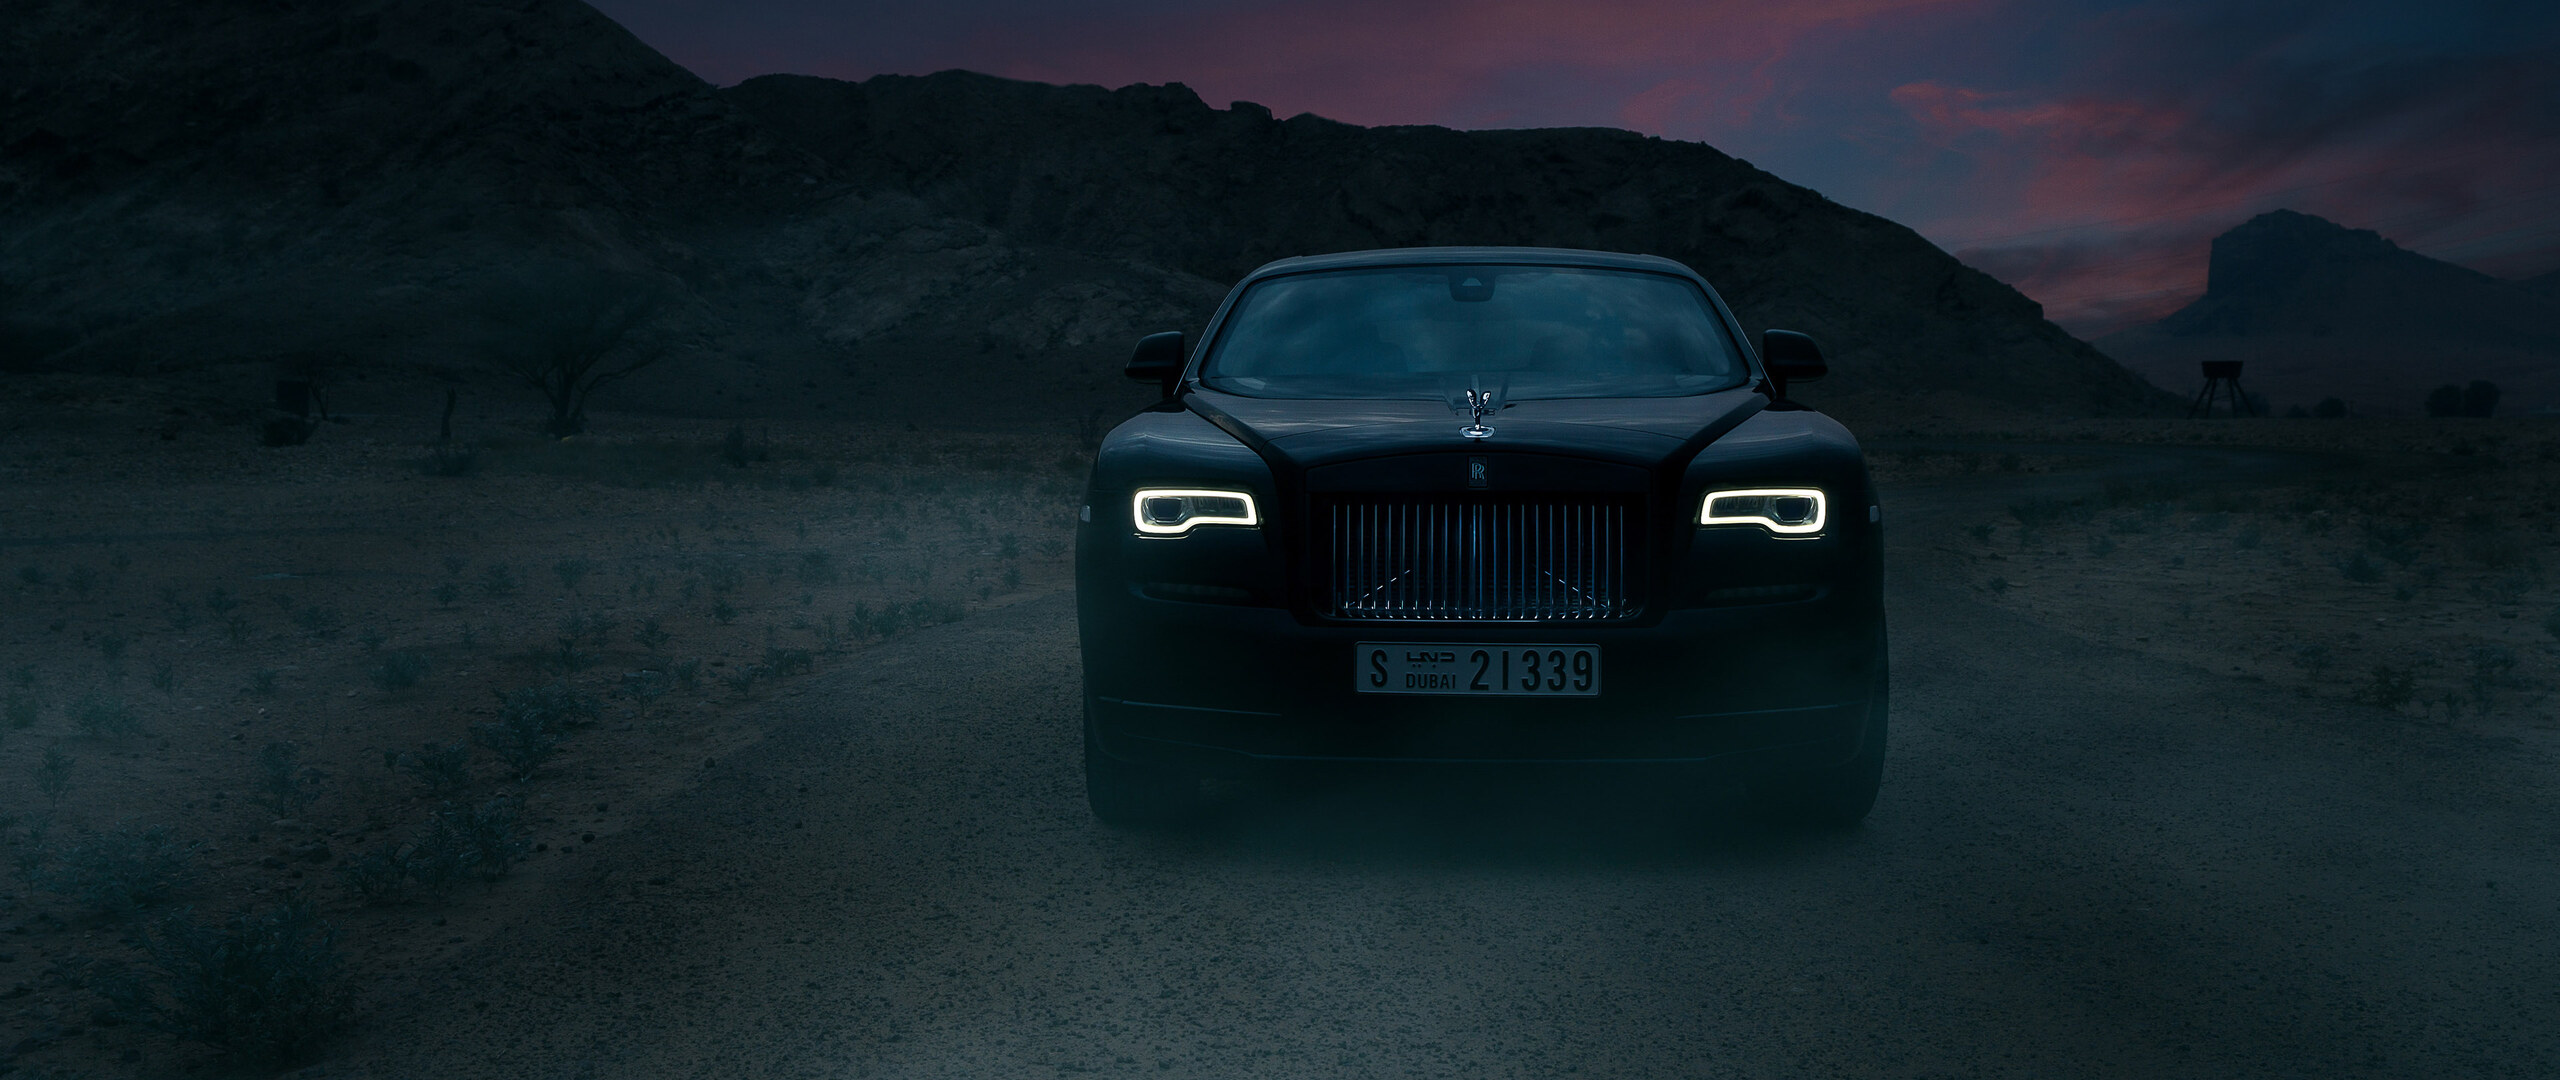 Rolls Royce Wraith Black Badge In 2560x1080 Resolution. rolls-royce-wraith-...